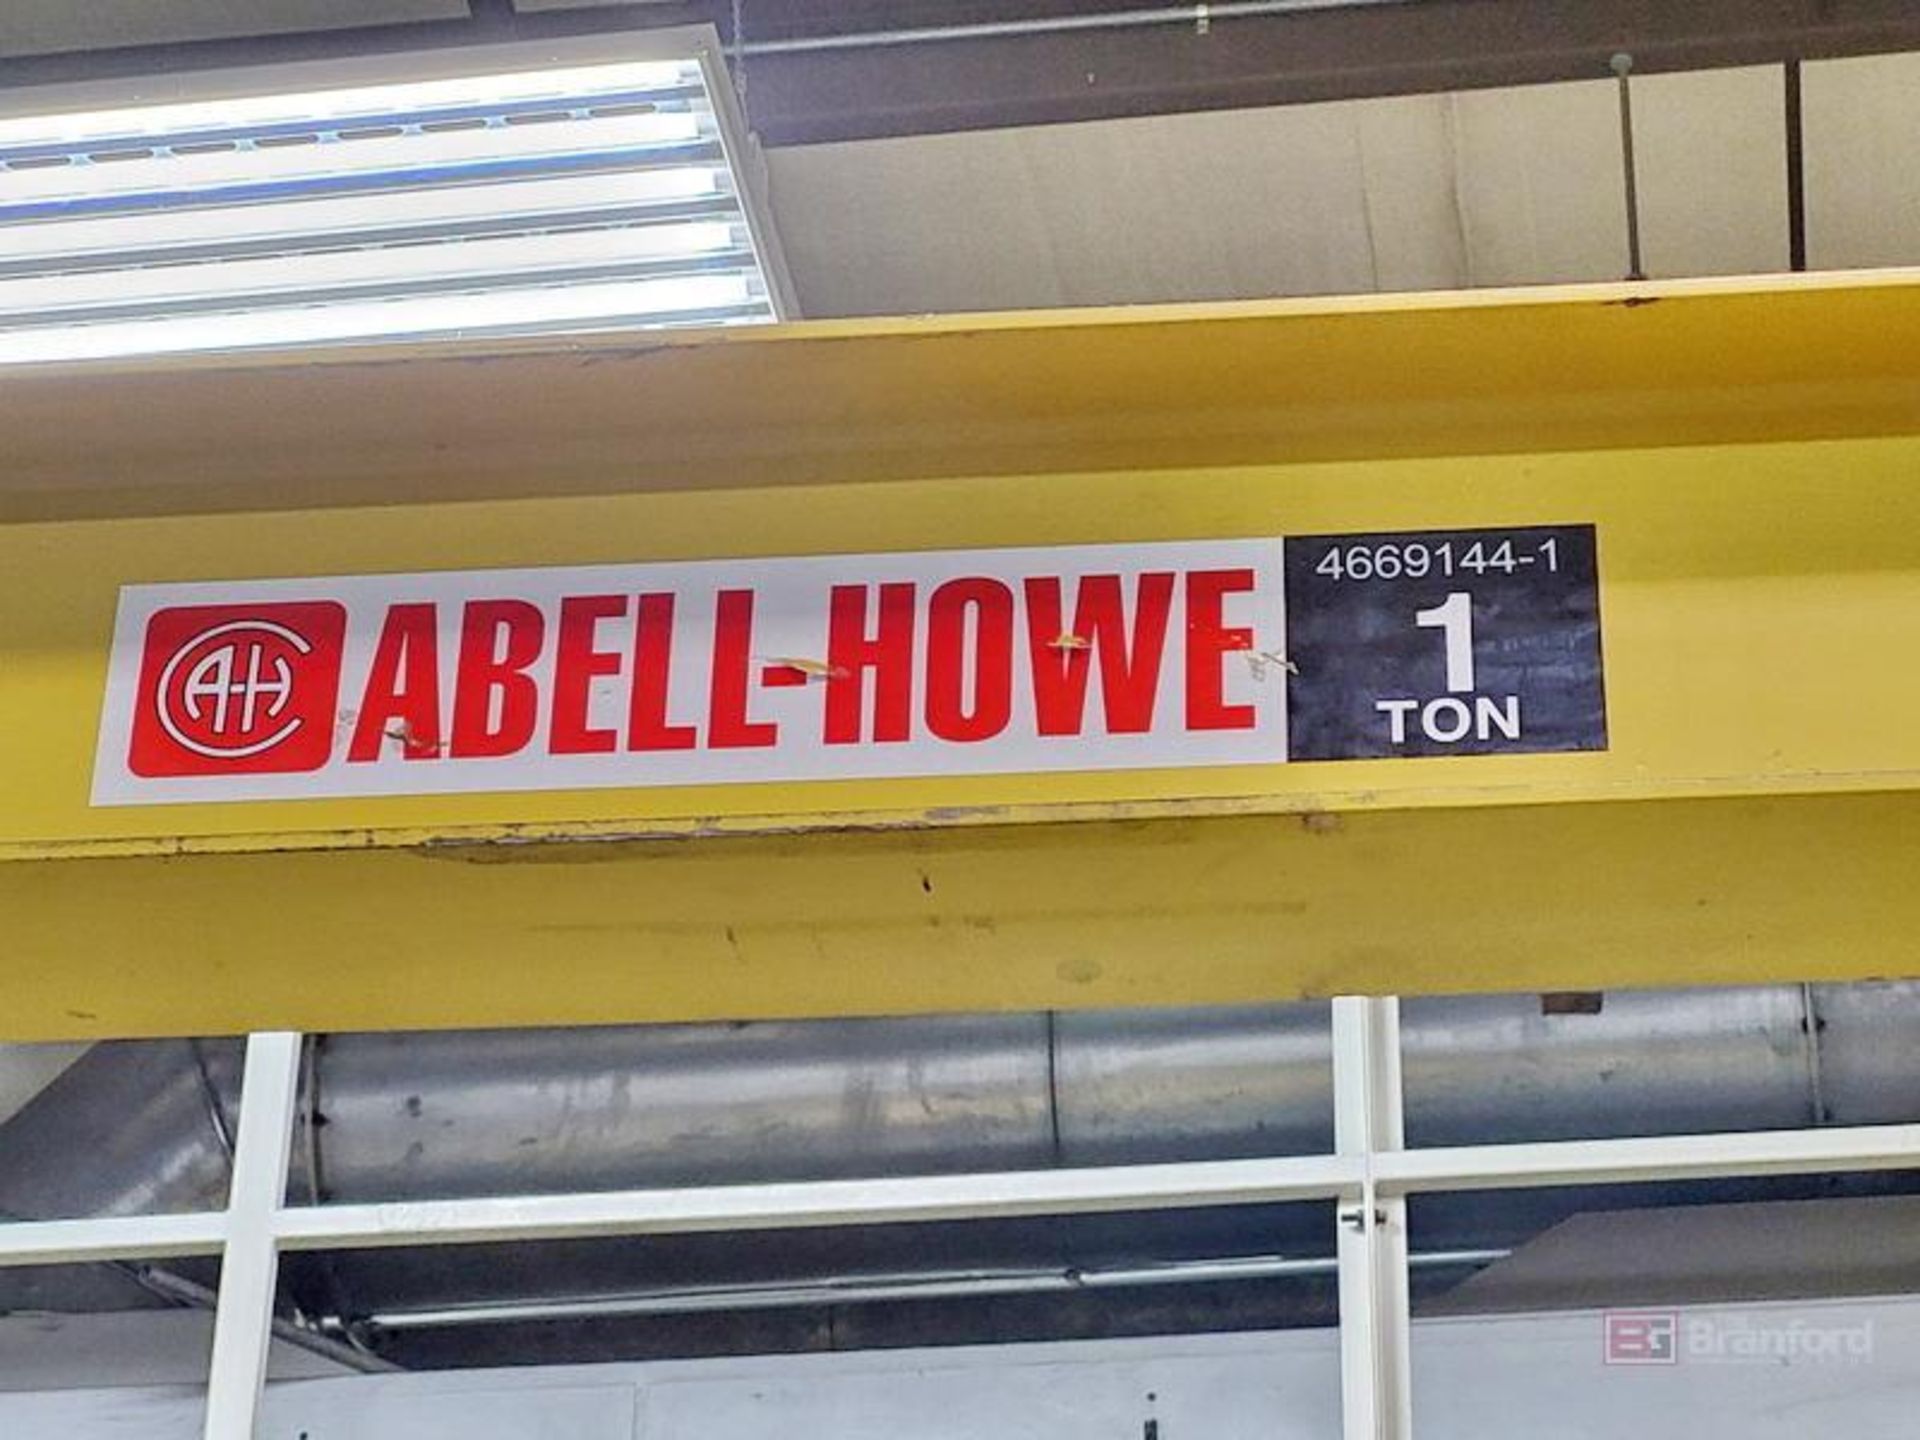 Abell-Howe Model 1-Ton Free Standing Swinging Jib Crane - Image 3 of 4